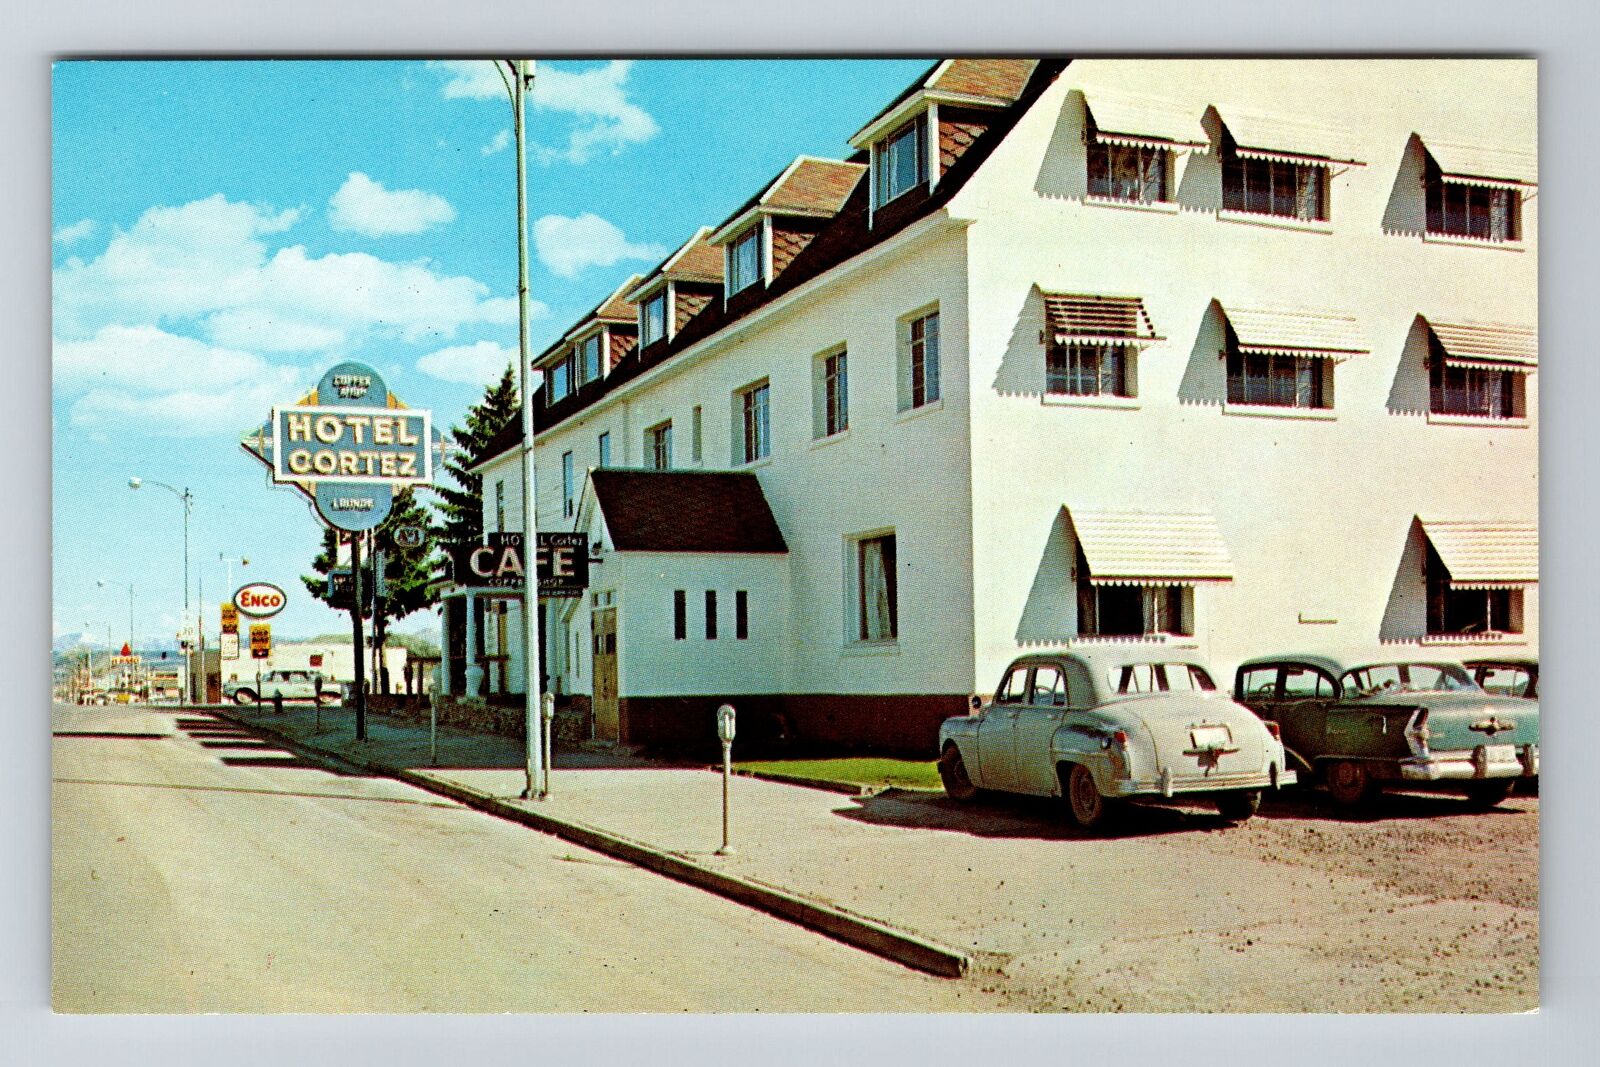 Cortez CO-Colorado Hotel Cortez Enco Gas Cars Antique Vintage Souvenir Postcard